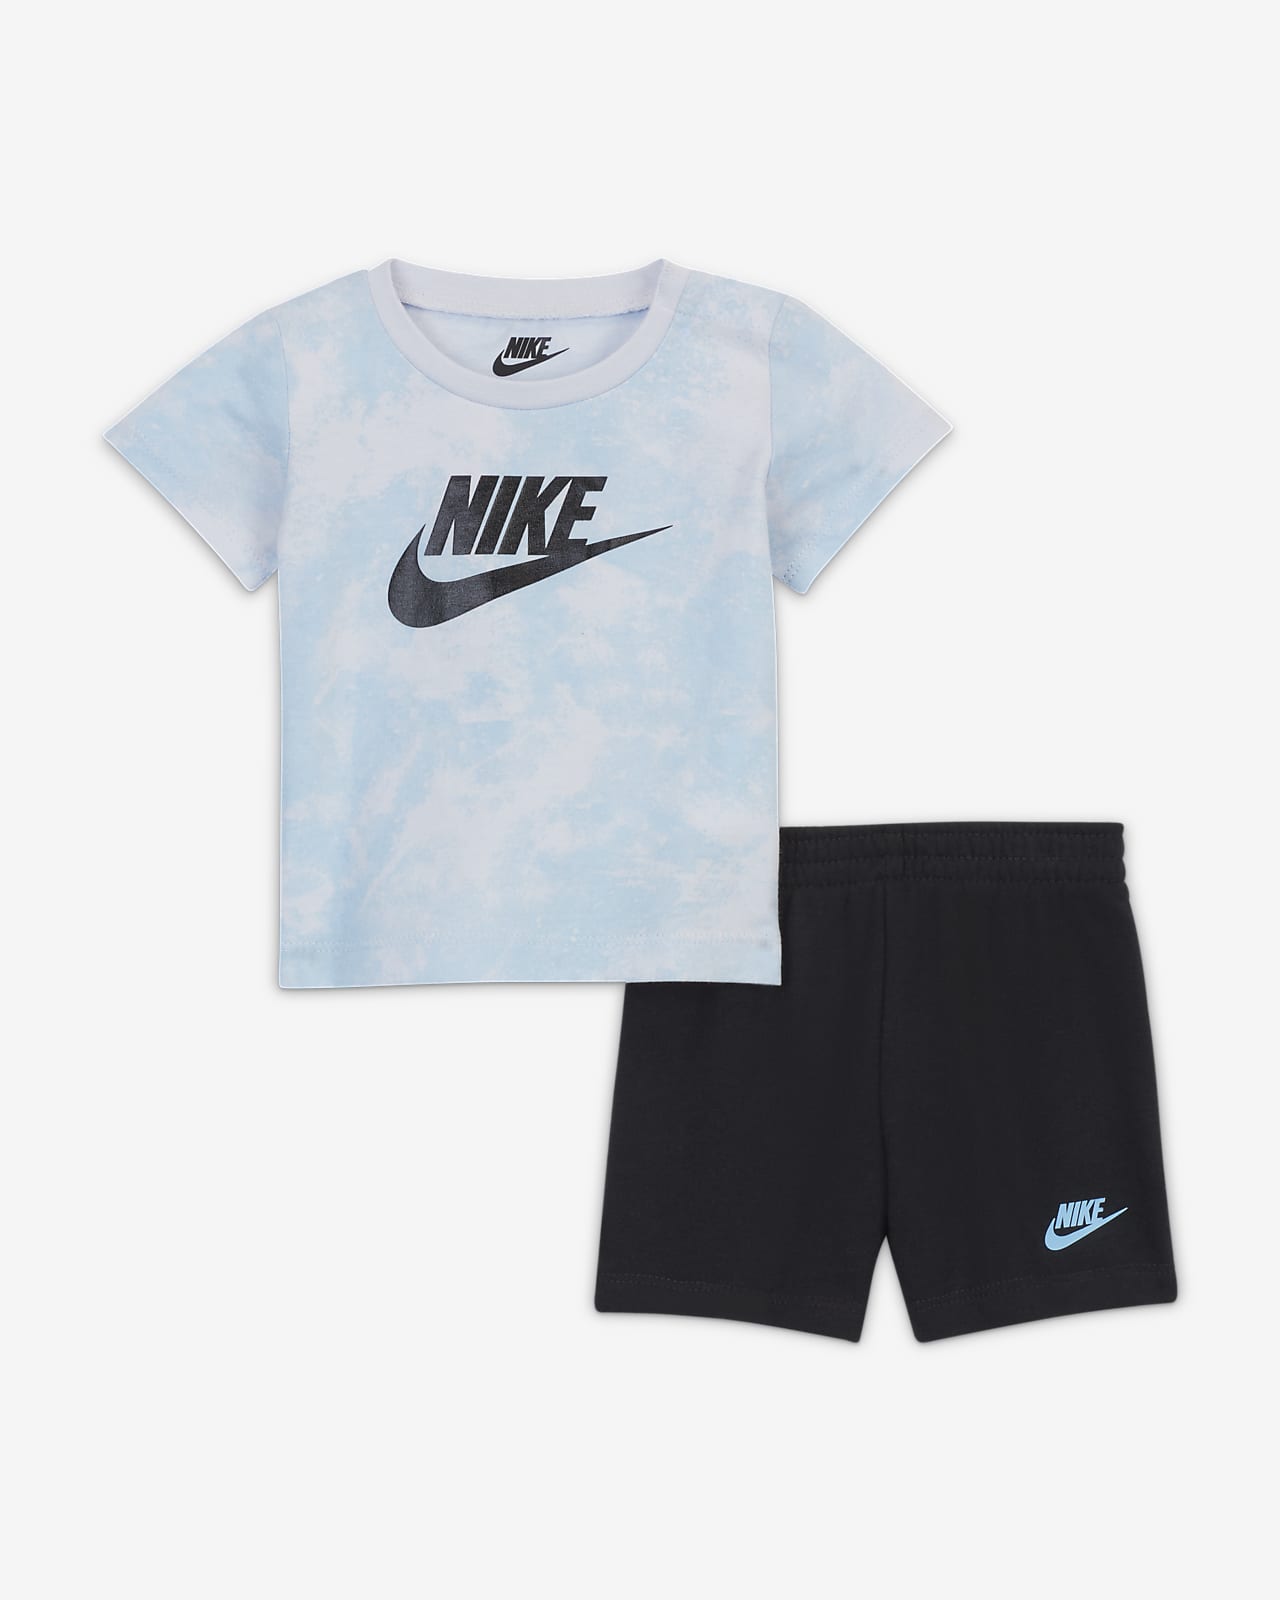 Nike Sportswear Baby (0-9M) T-Shirt and Shorts Set